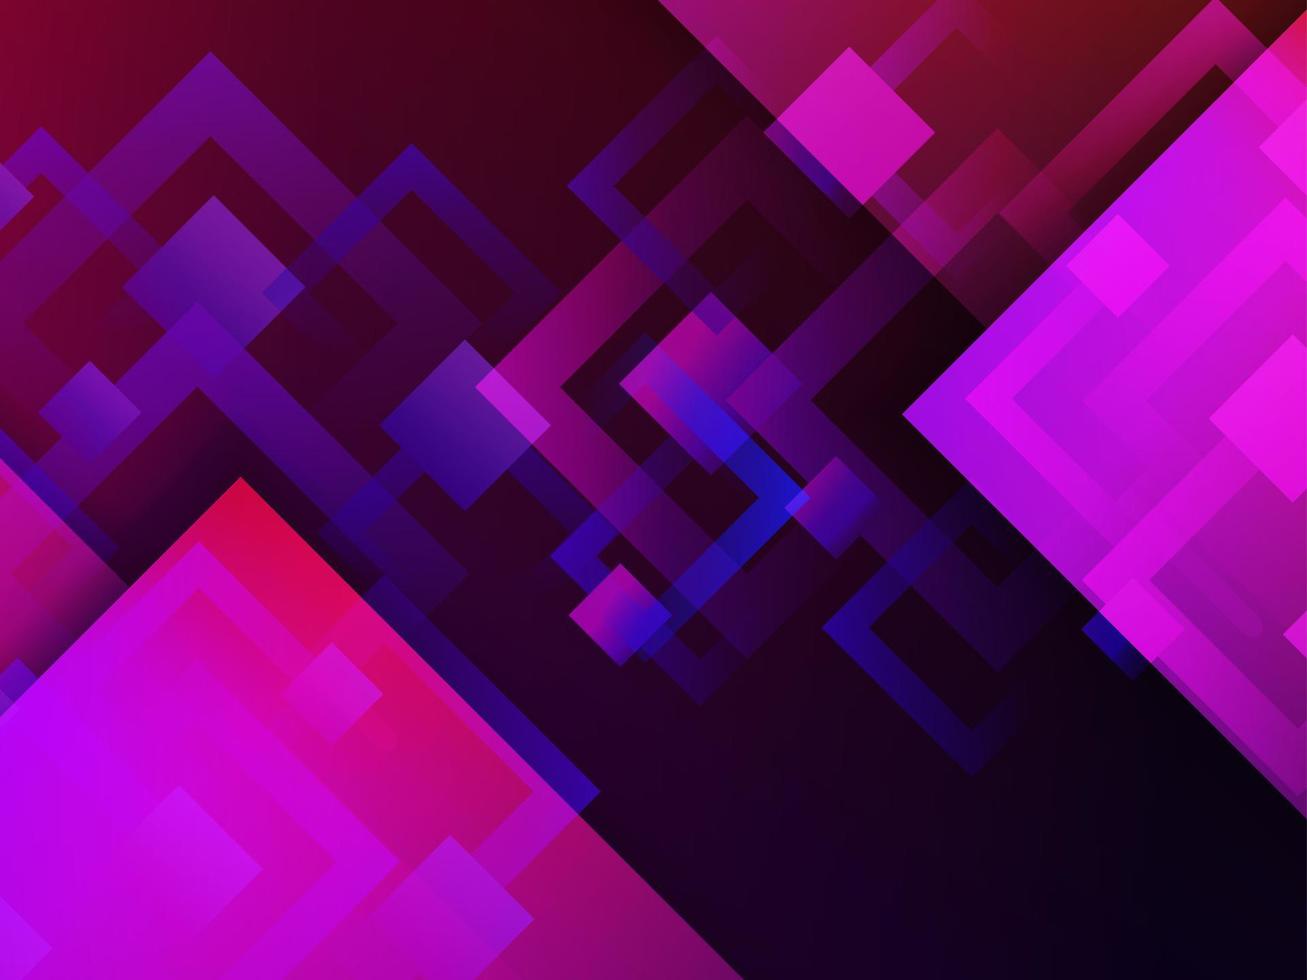 Fondo de patrón de banner de diseño colorido decorativo moderno geométrico púrpura abstracto vector